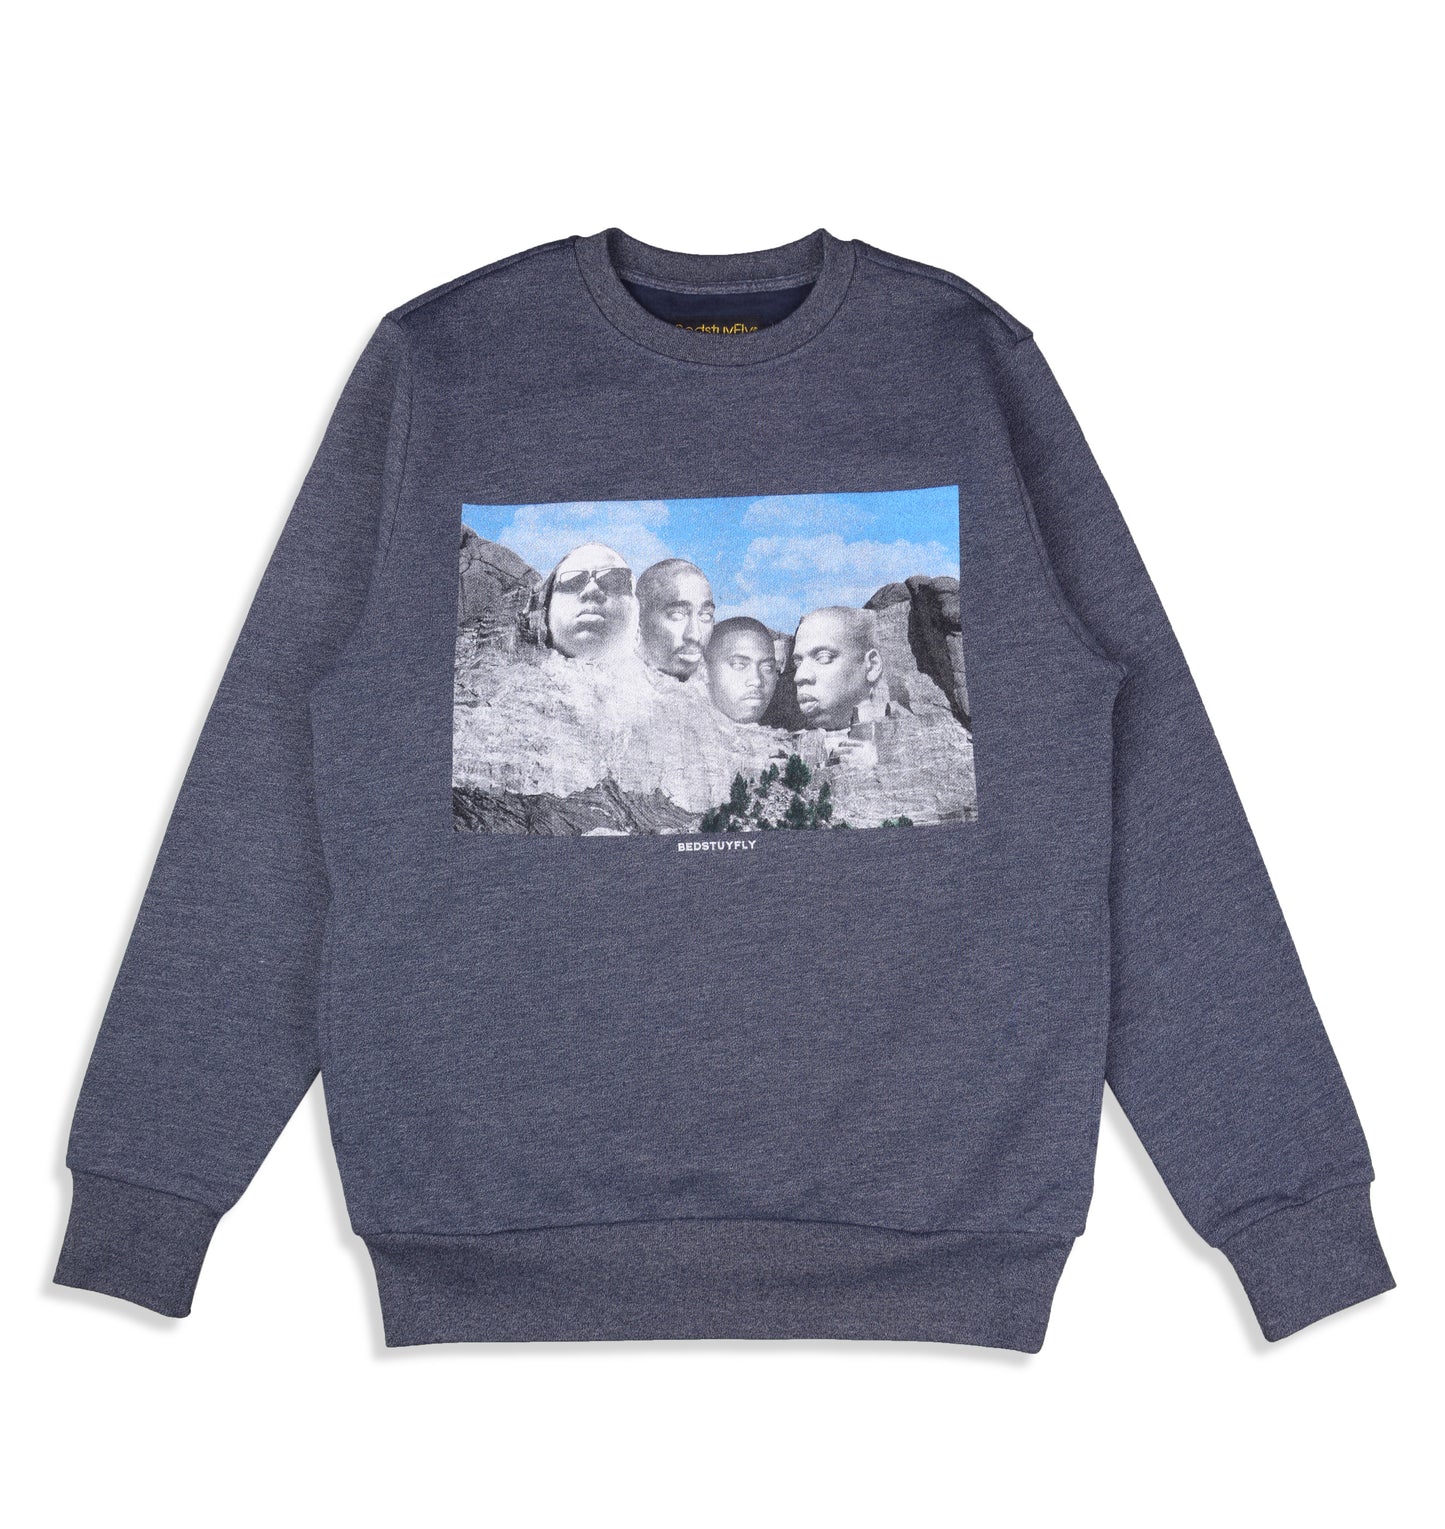 Mount Rapmore Sweatshirt (Blue) - Bedstuyfly